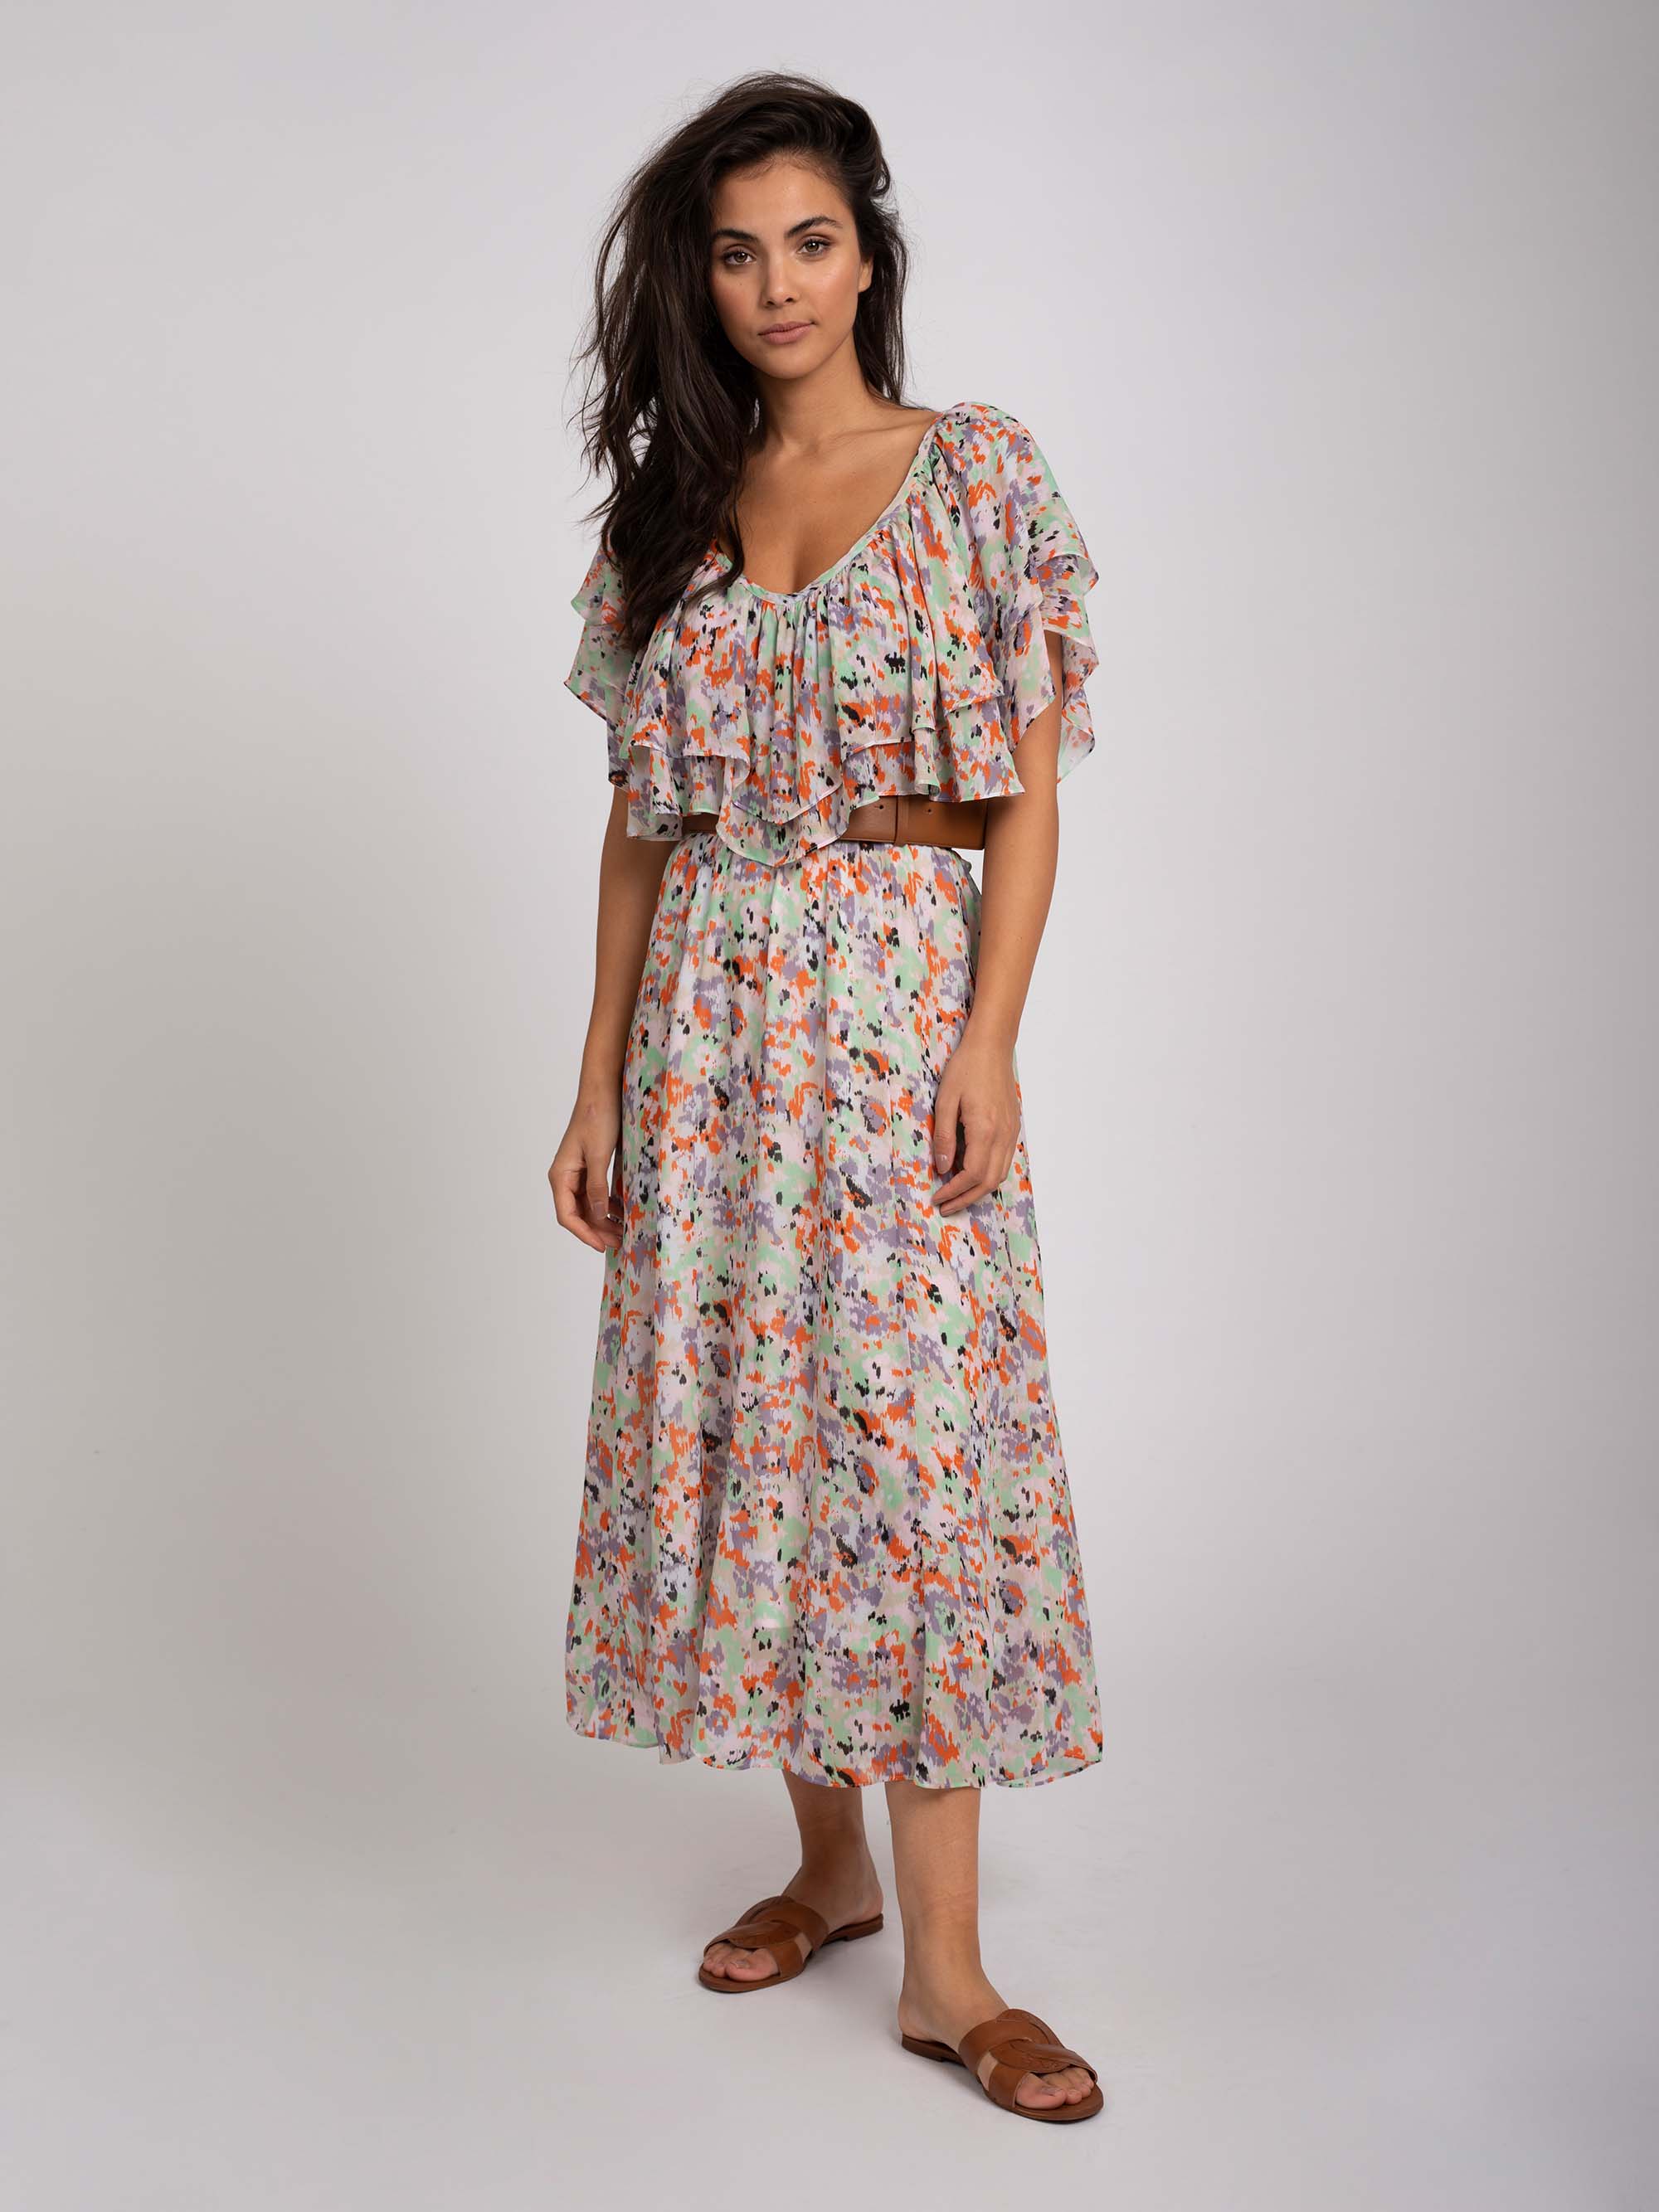 Flower print maxi dress with elastic waistband